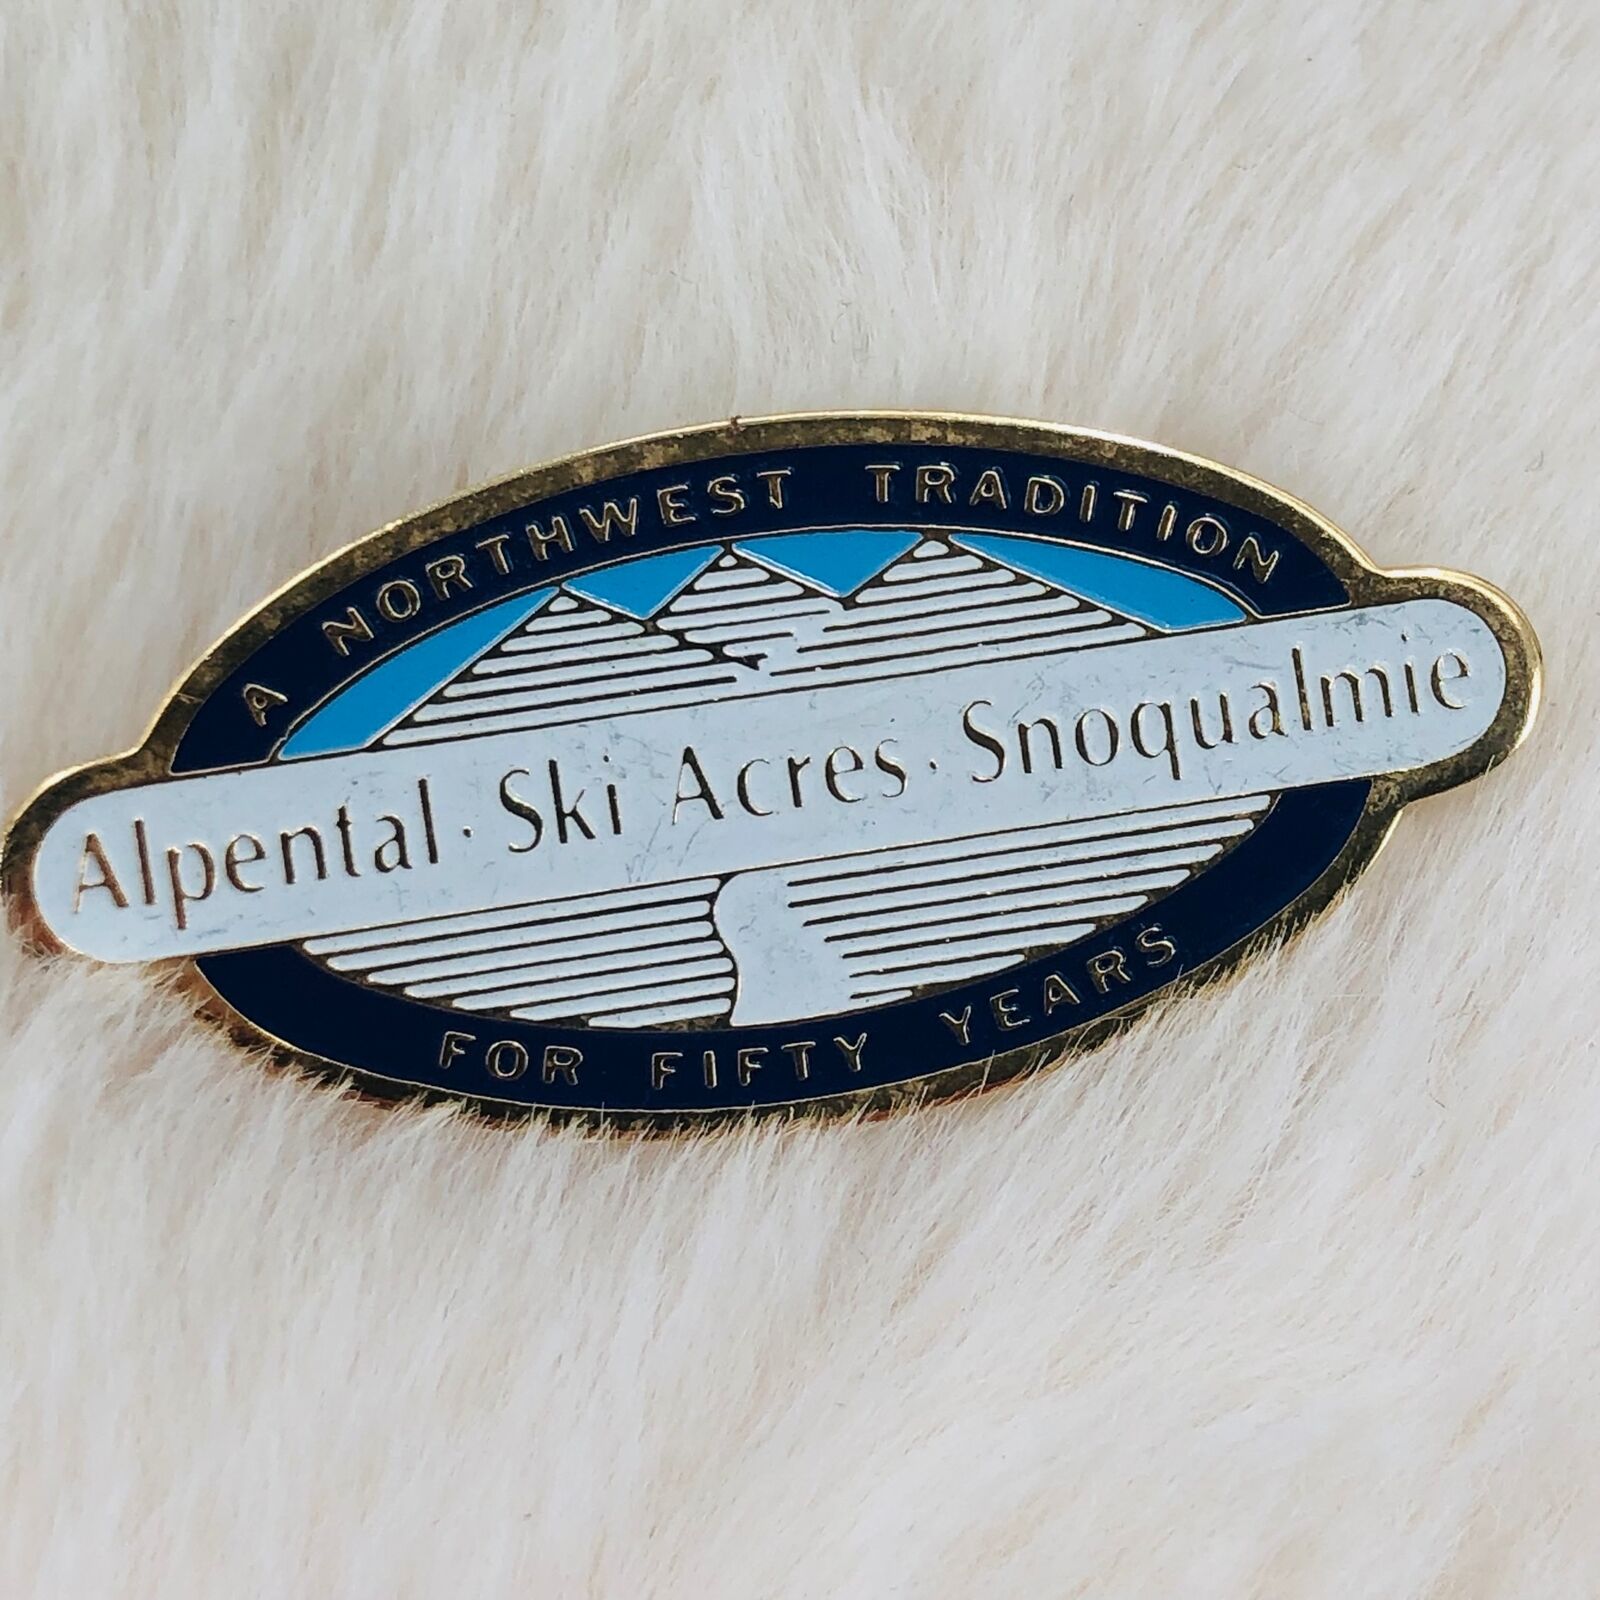 Alpental Ski Acres Snoqualmie Ski Resort Washington Souvenir Enamel Lapel Pin